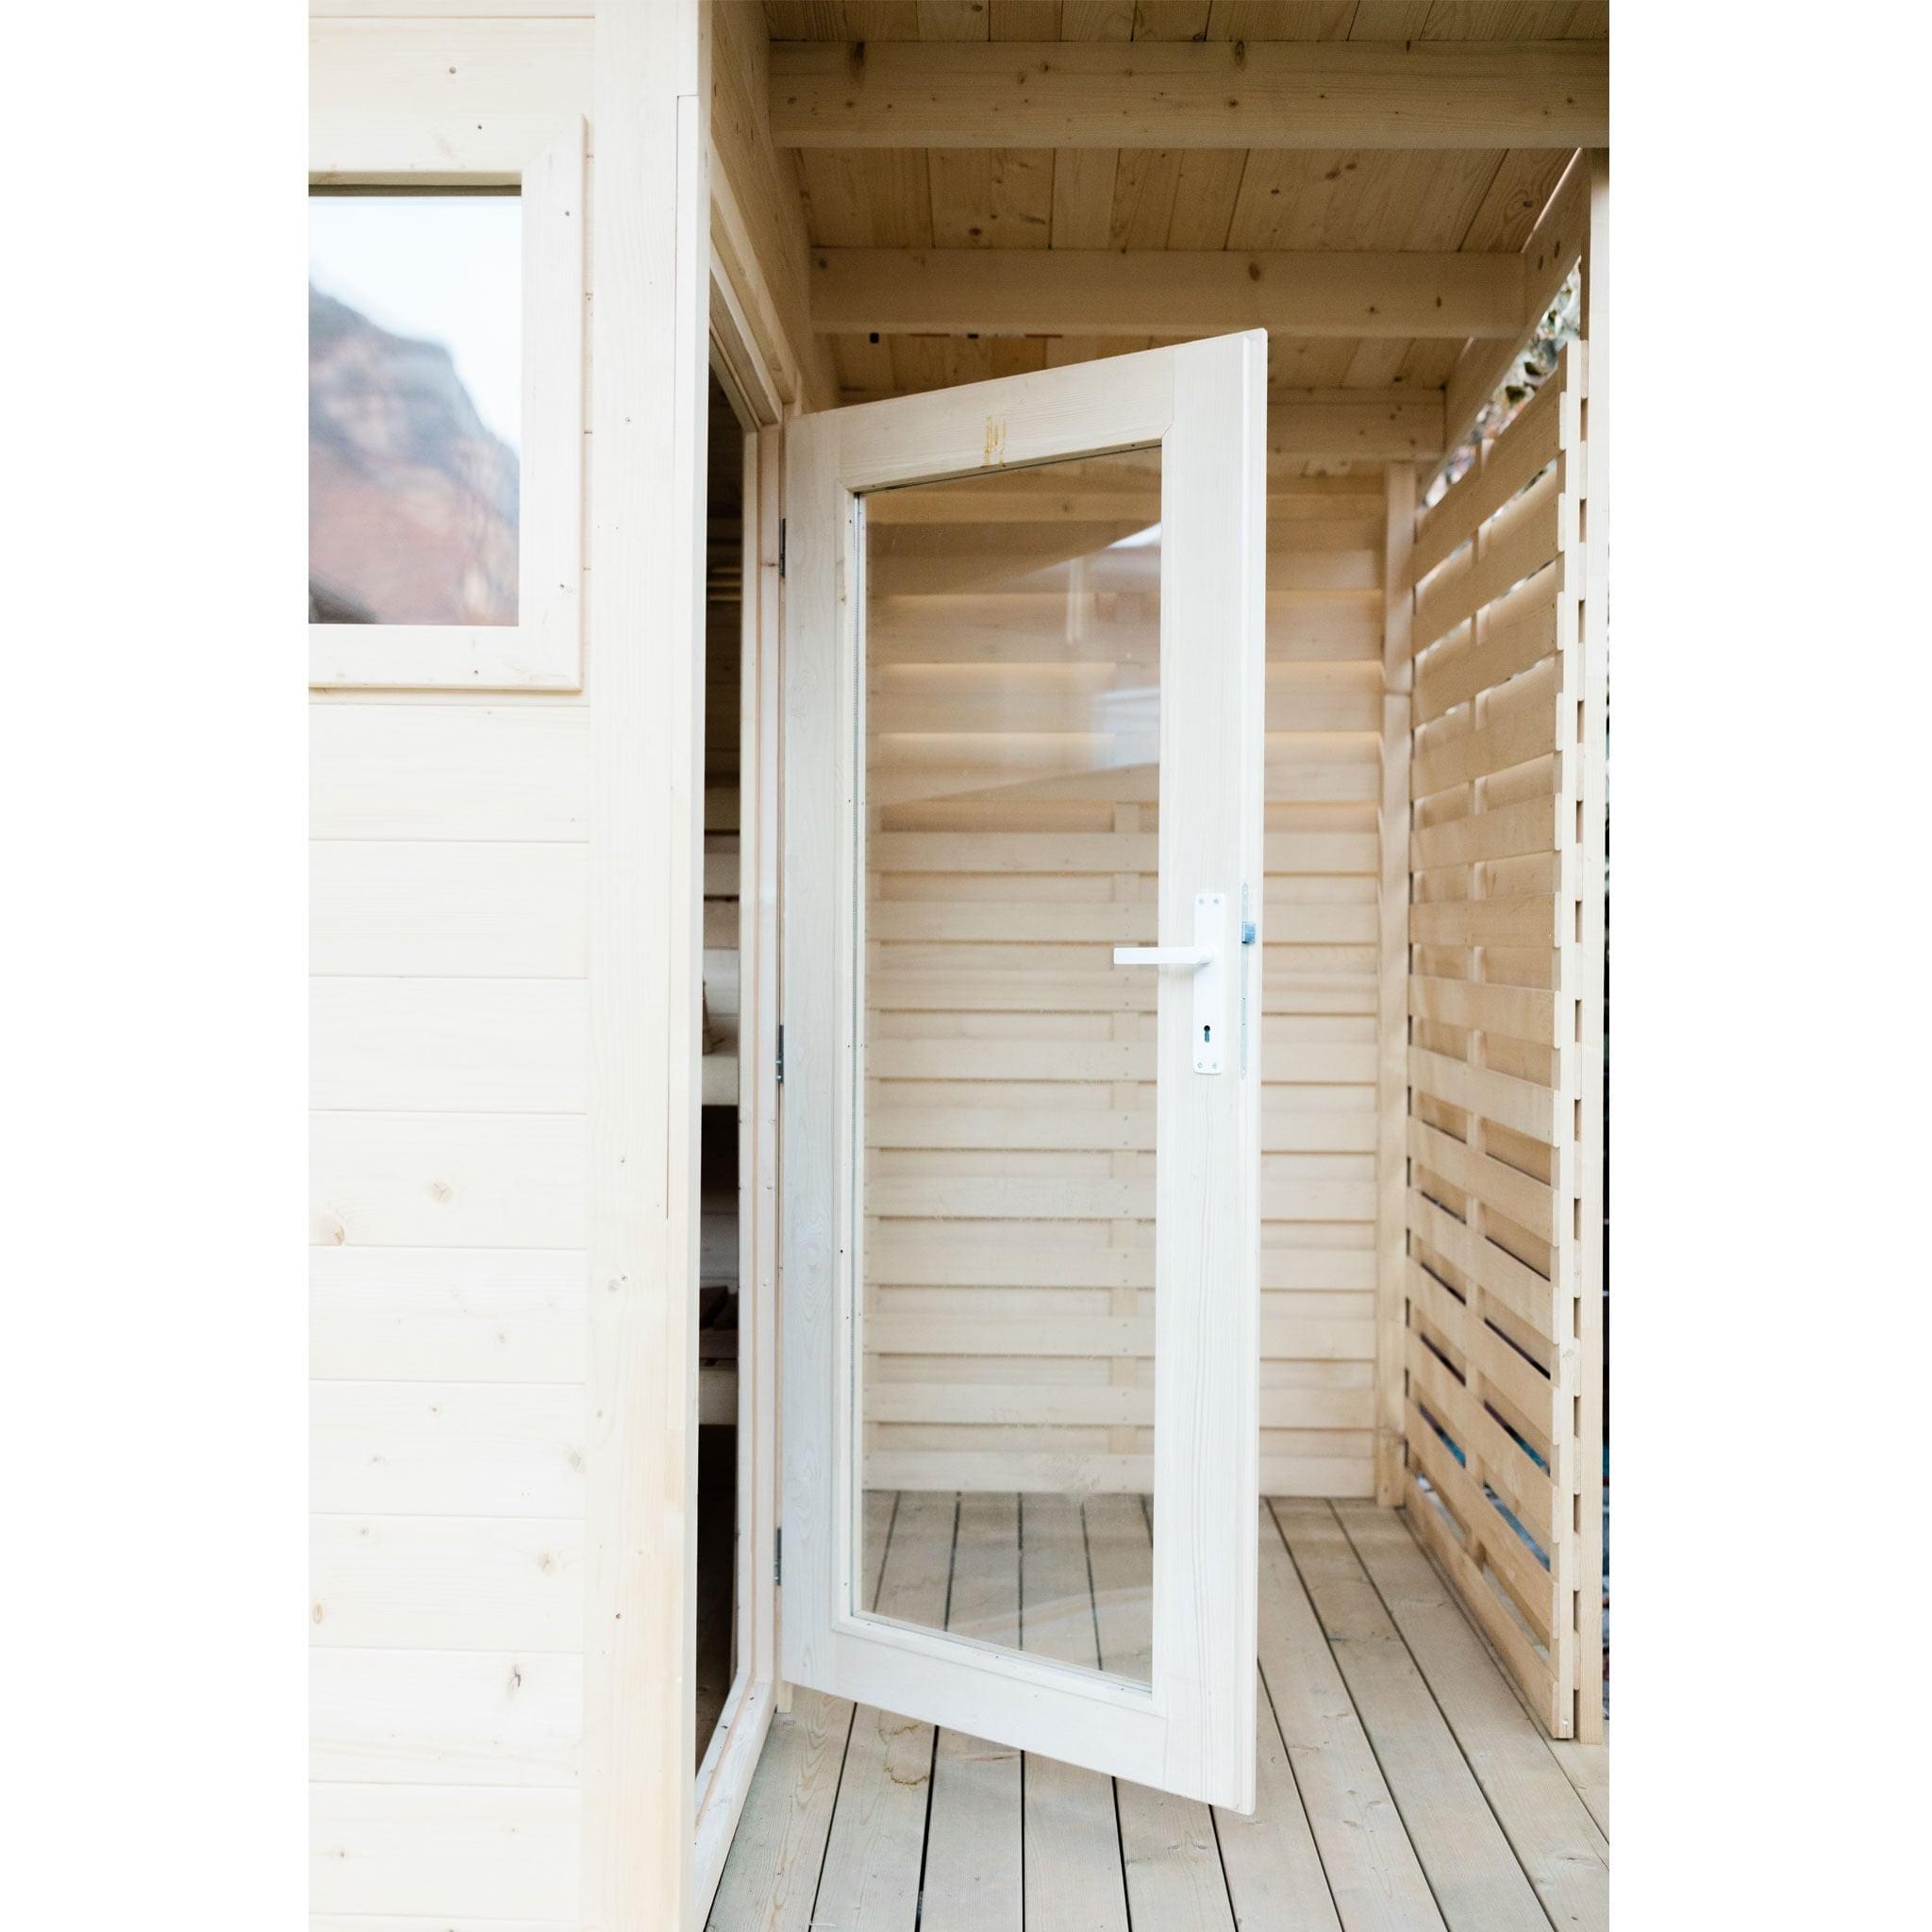 Almost Heaven Timberline 6-Person Outdoor Cabin Sauna